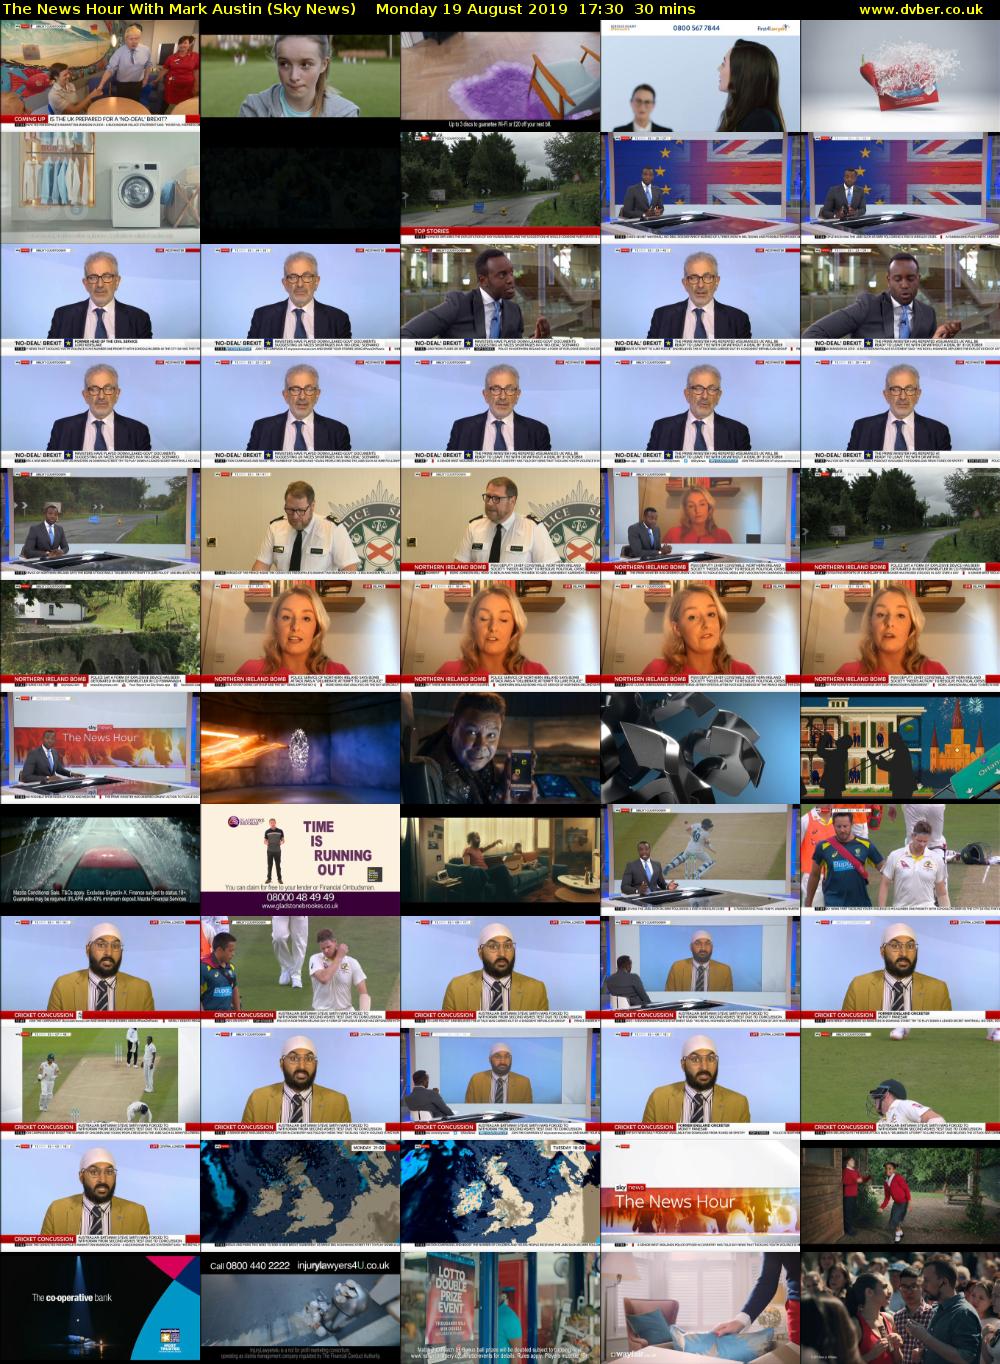 The News Hour With Mark Austin (Sky News) Monday 19 August 2019 17:30 - 18:00